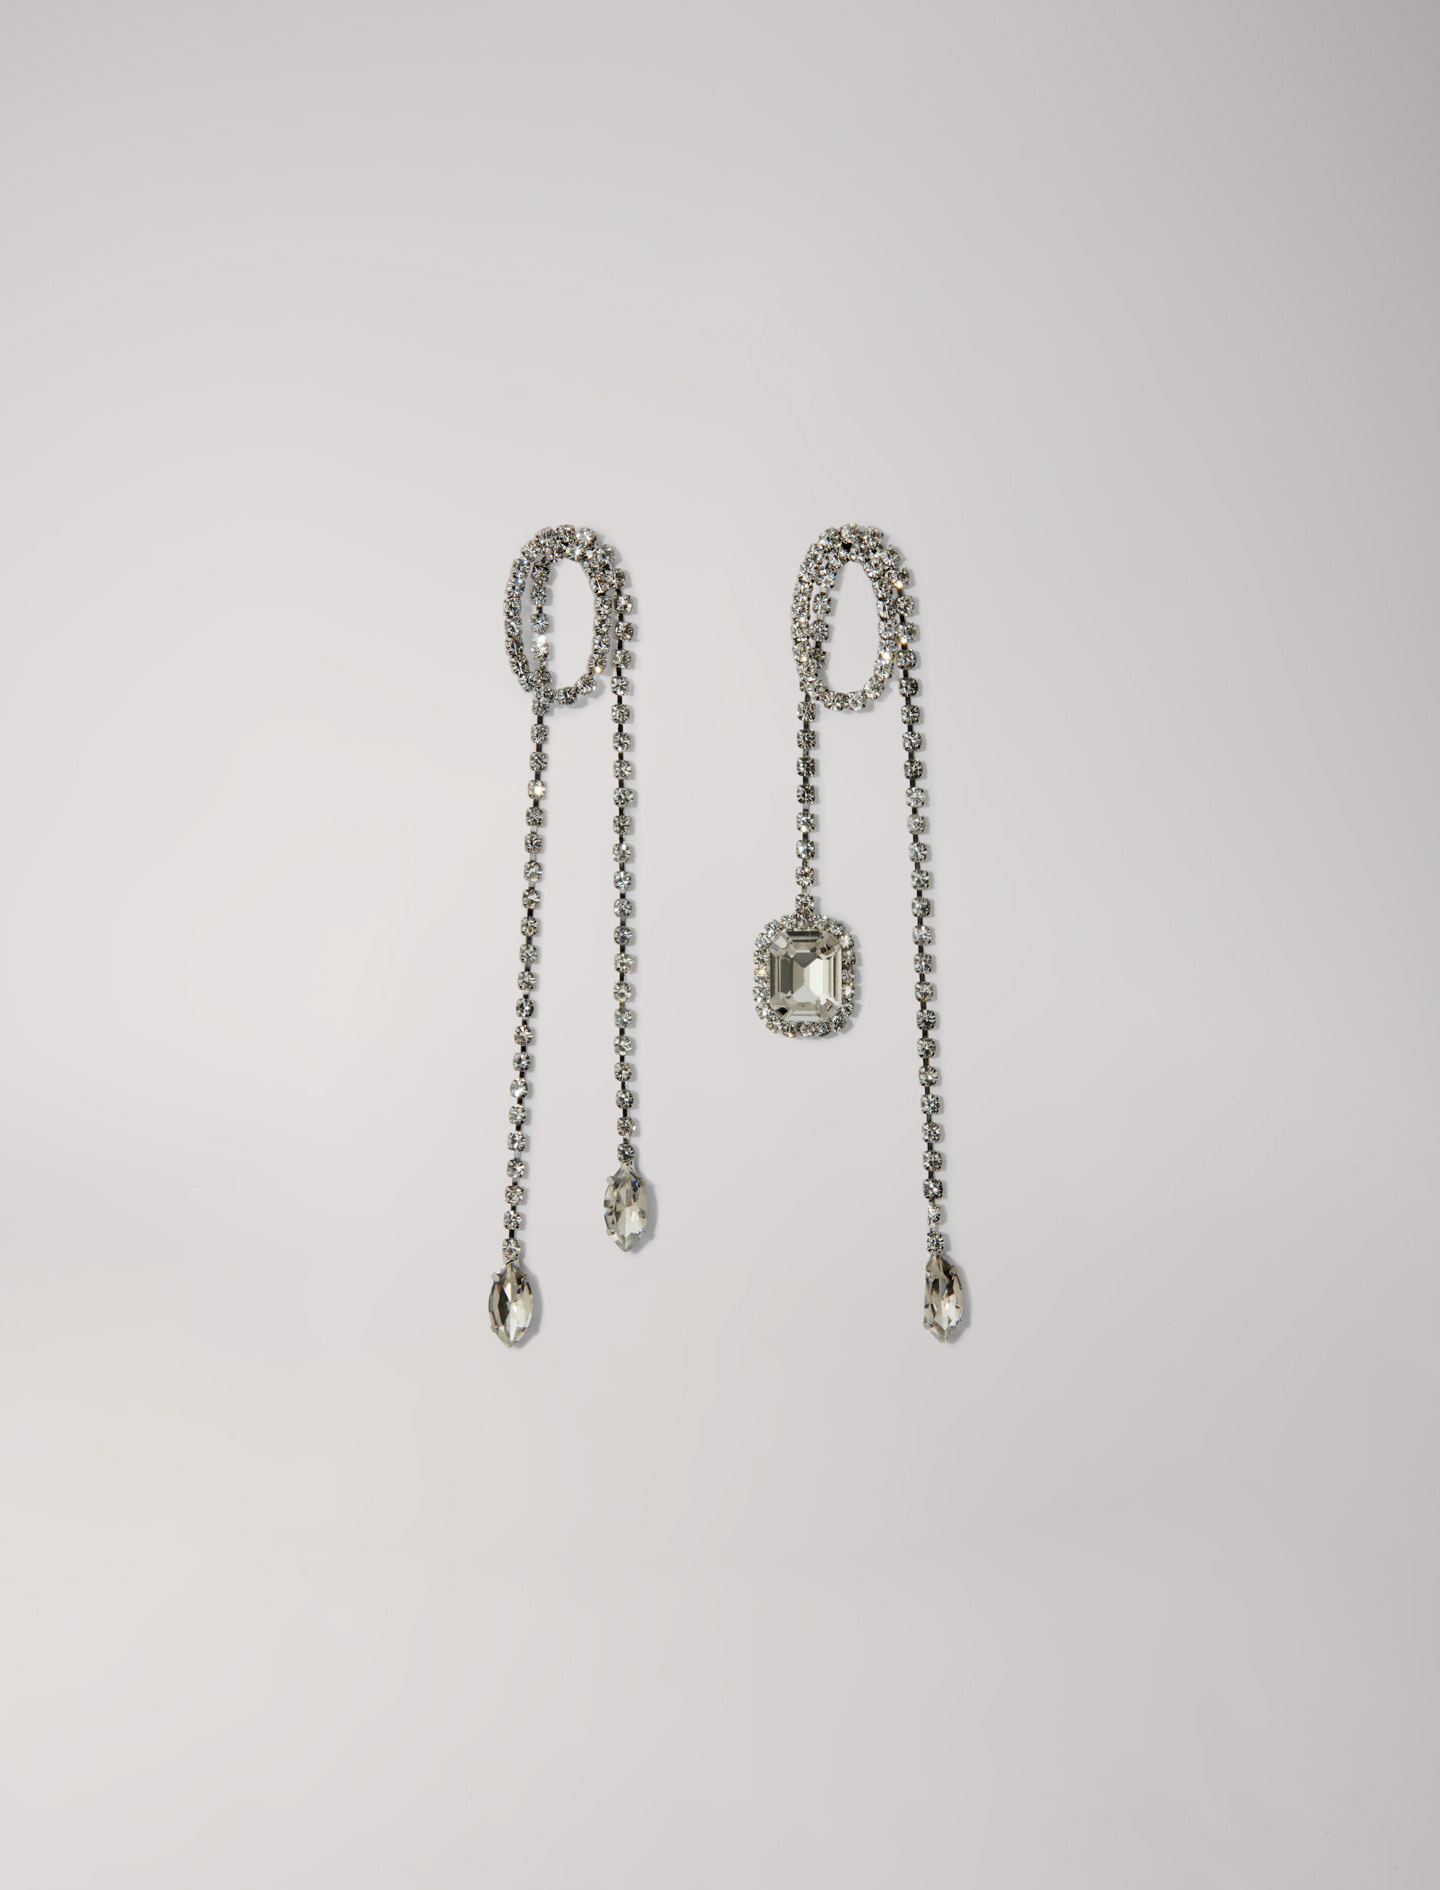 Maje Woman's glass Jewellery: Rhinestone earrings for Fall/Winter, in color Silver / Grey